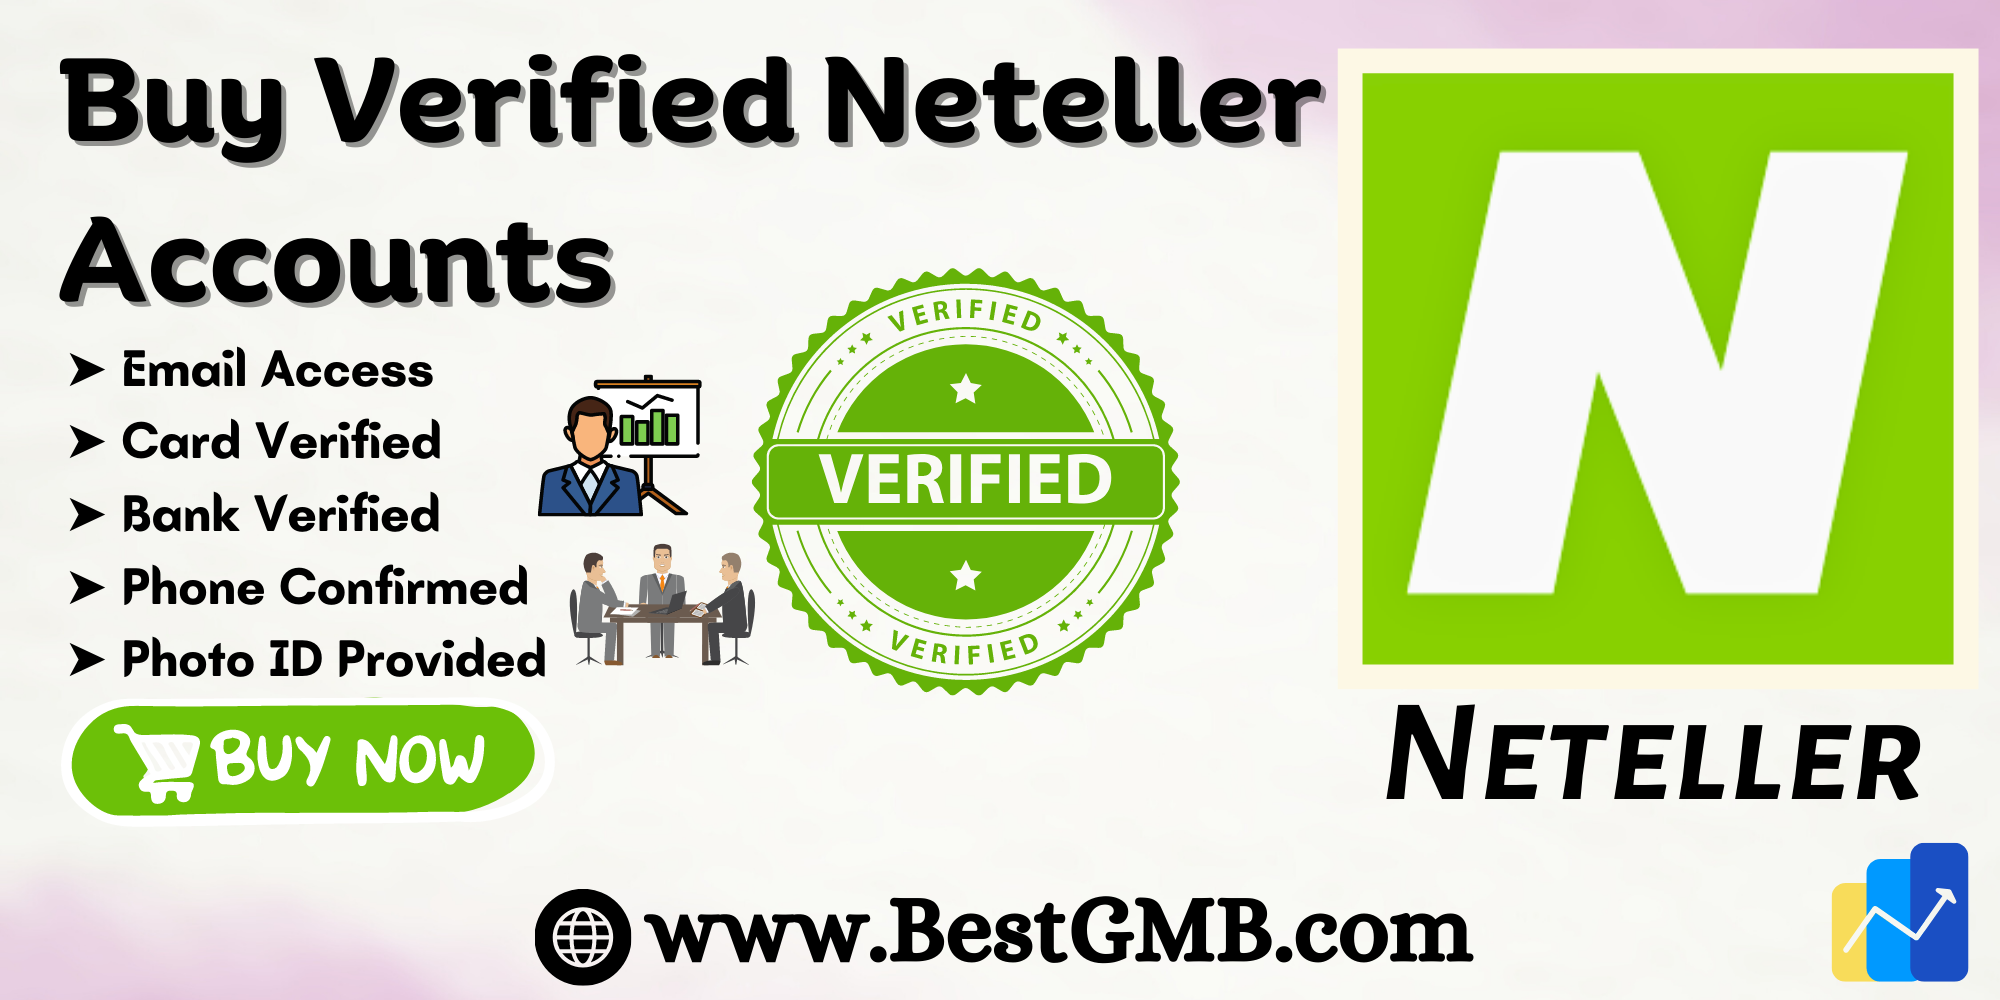 Buy verified neteller accounts